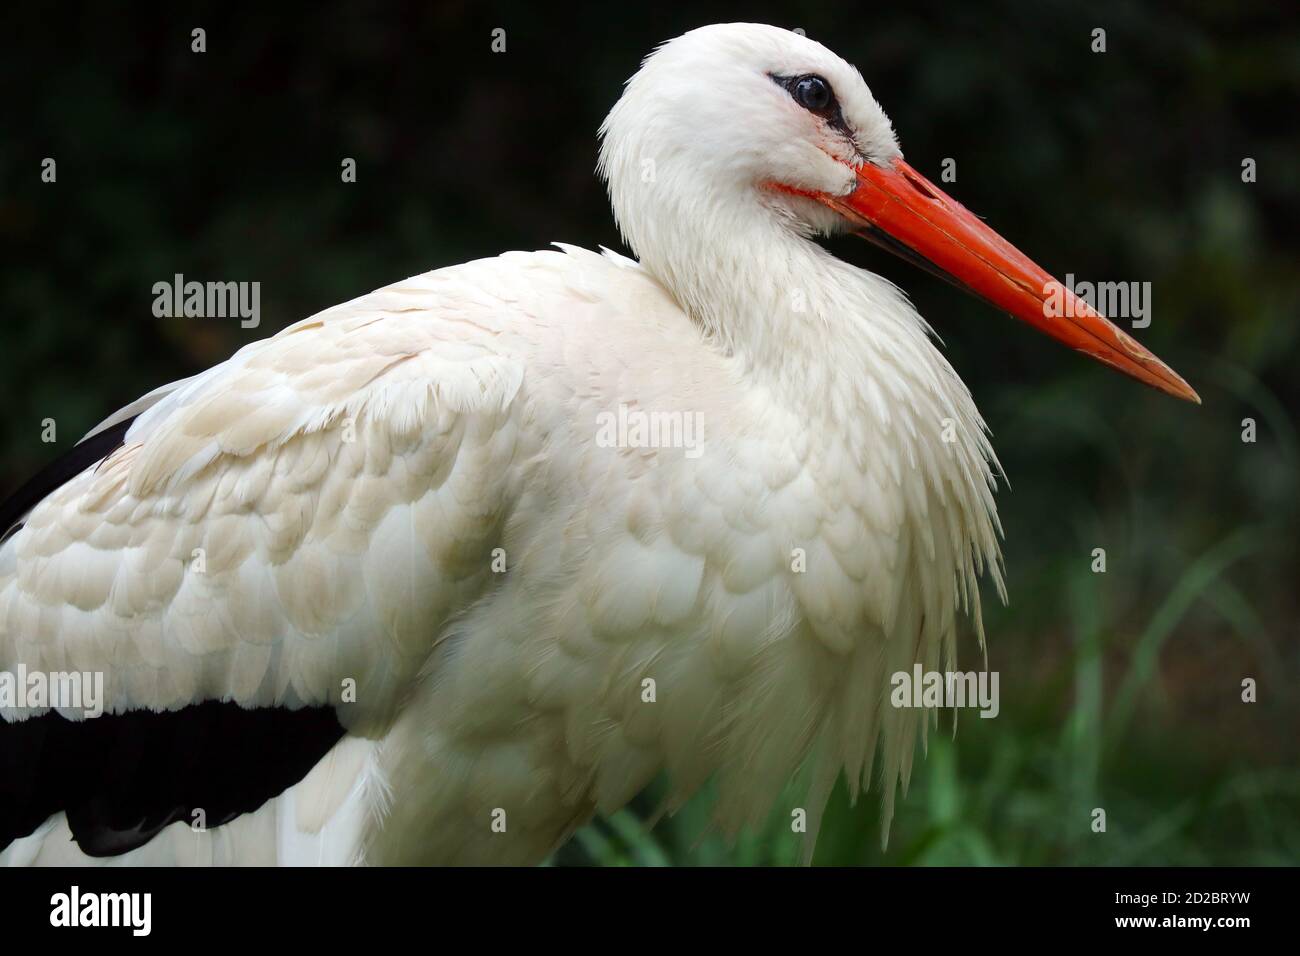 Long beak animal hi-res stock photography and images - Alamy